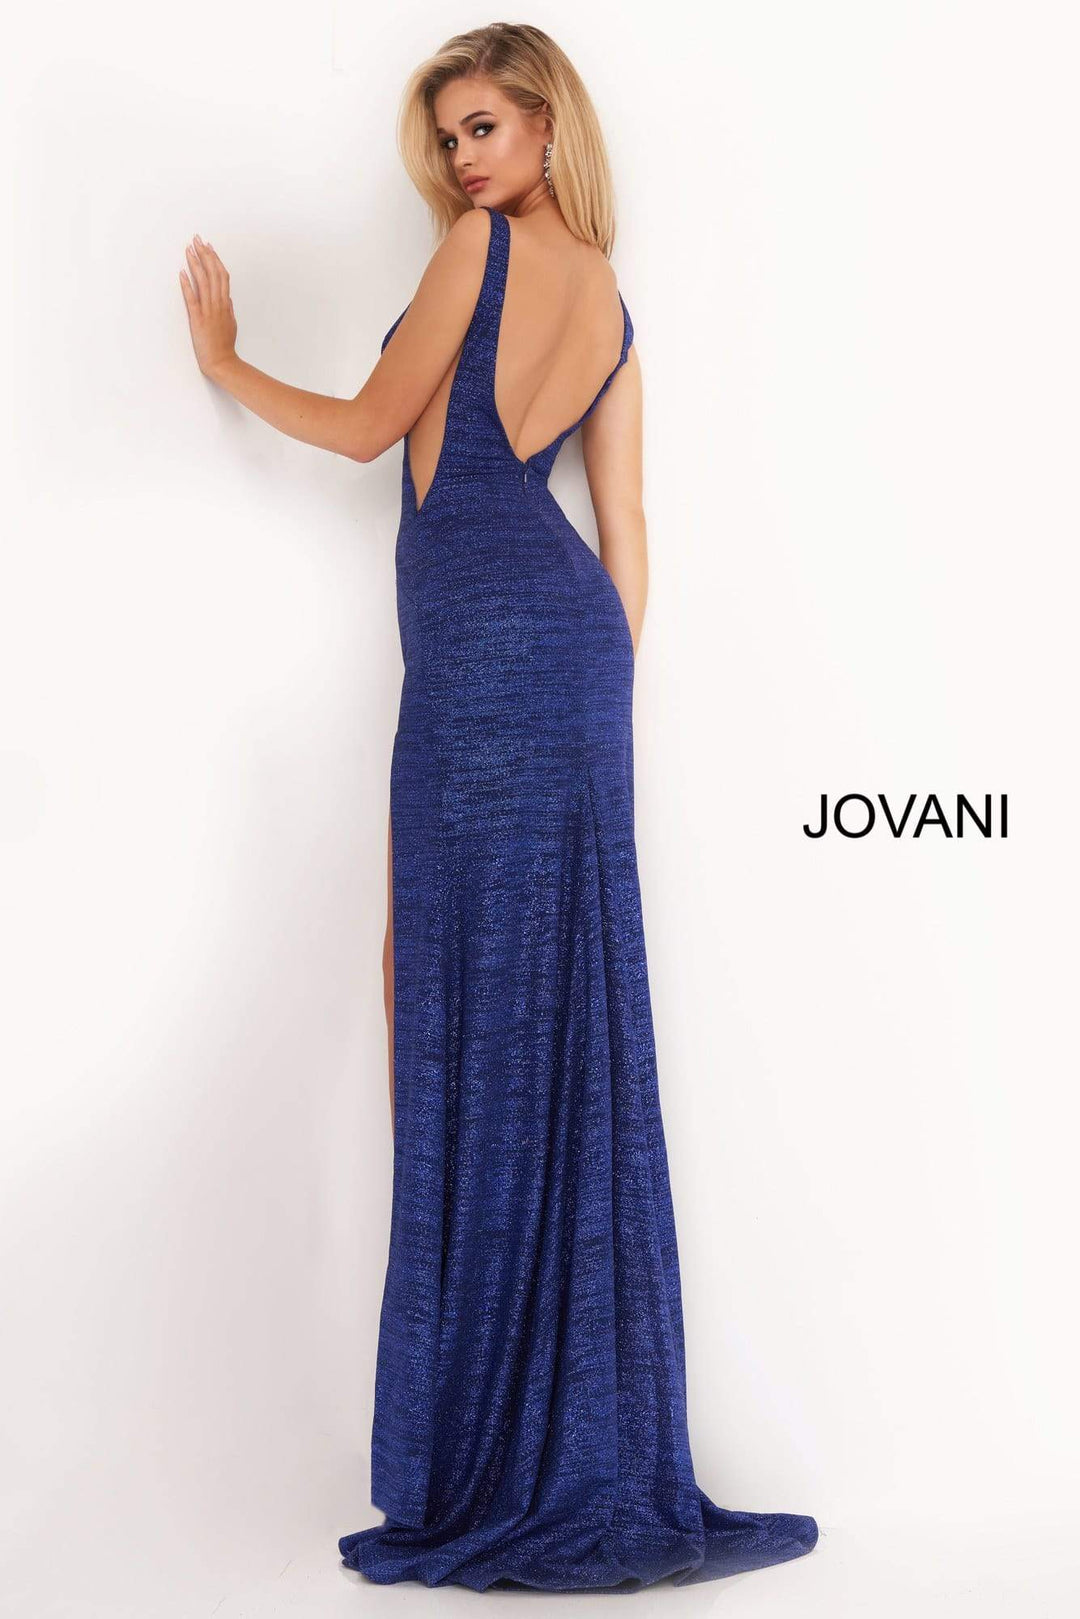 Jovani 2472 Dress - FOSTANI